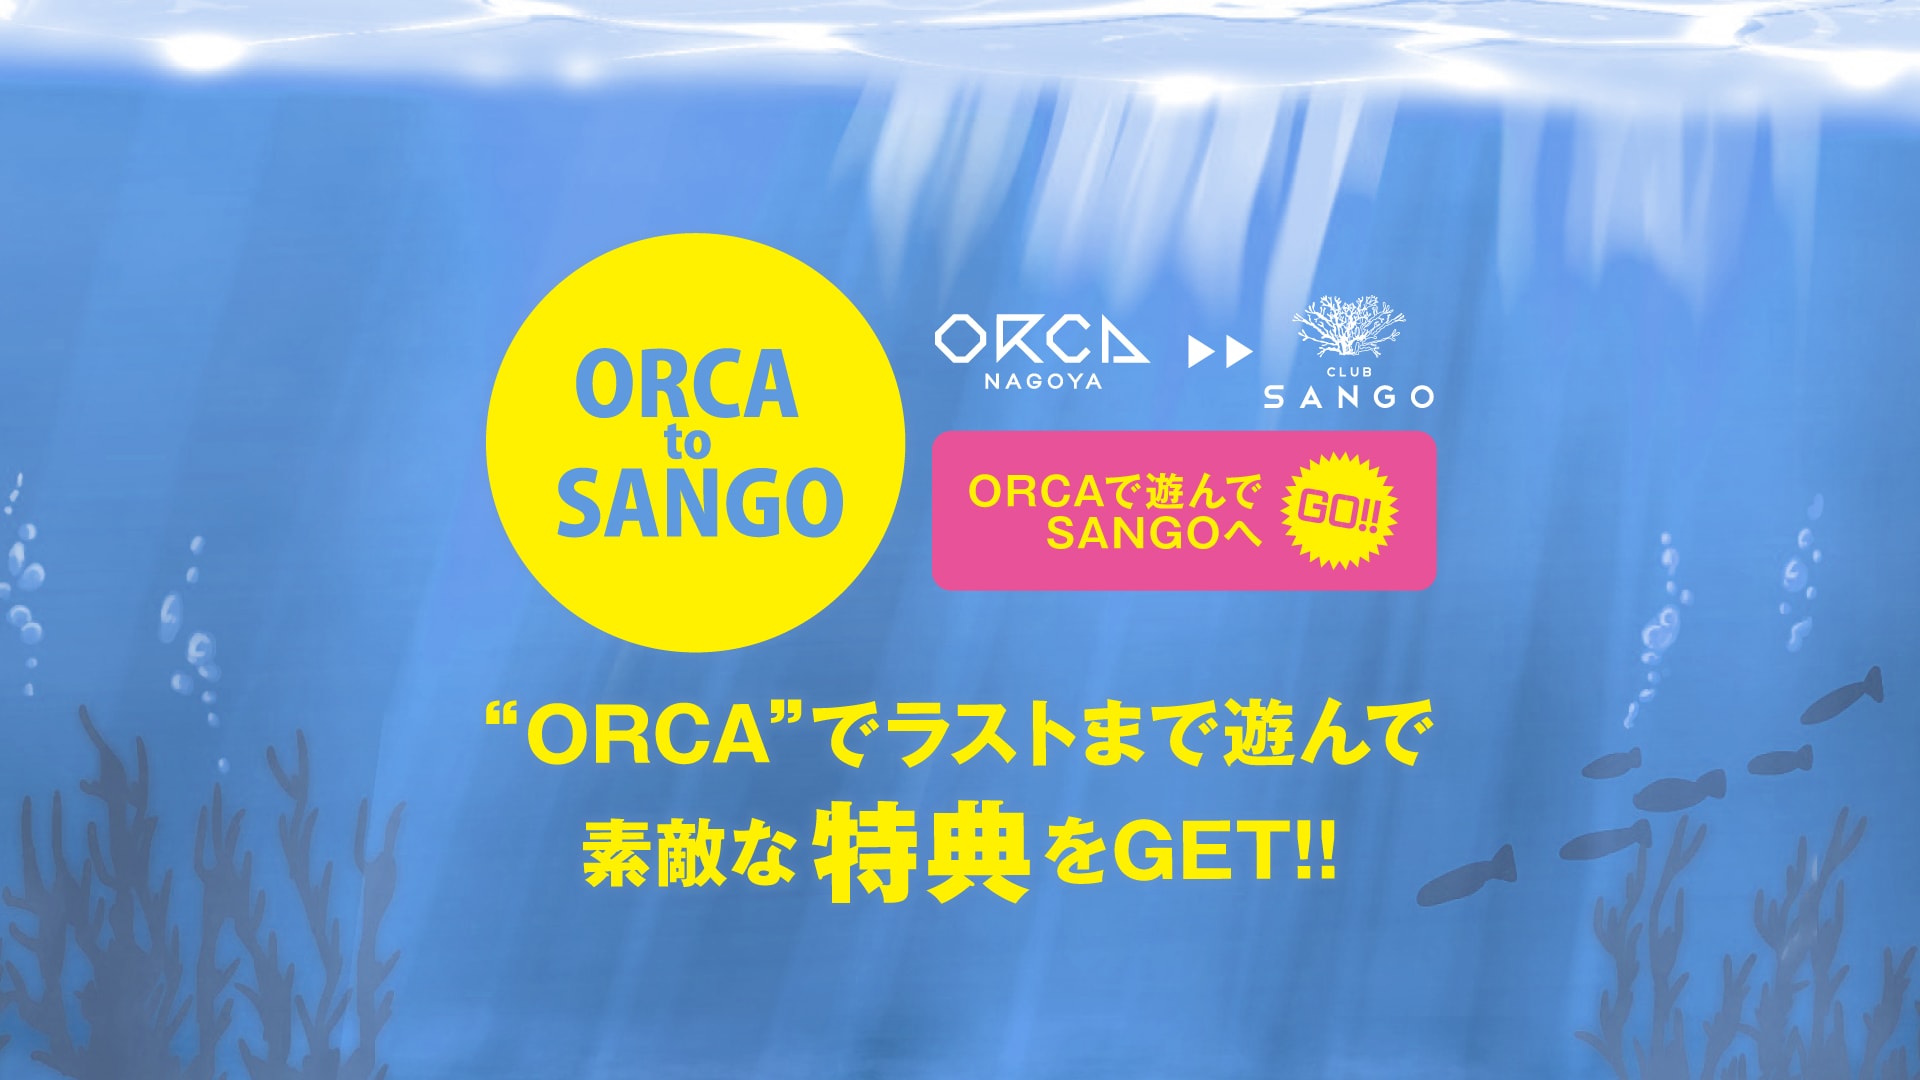 ORCA to SANGOが超お得！